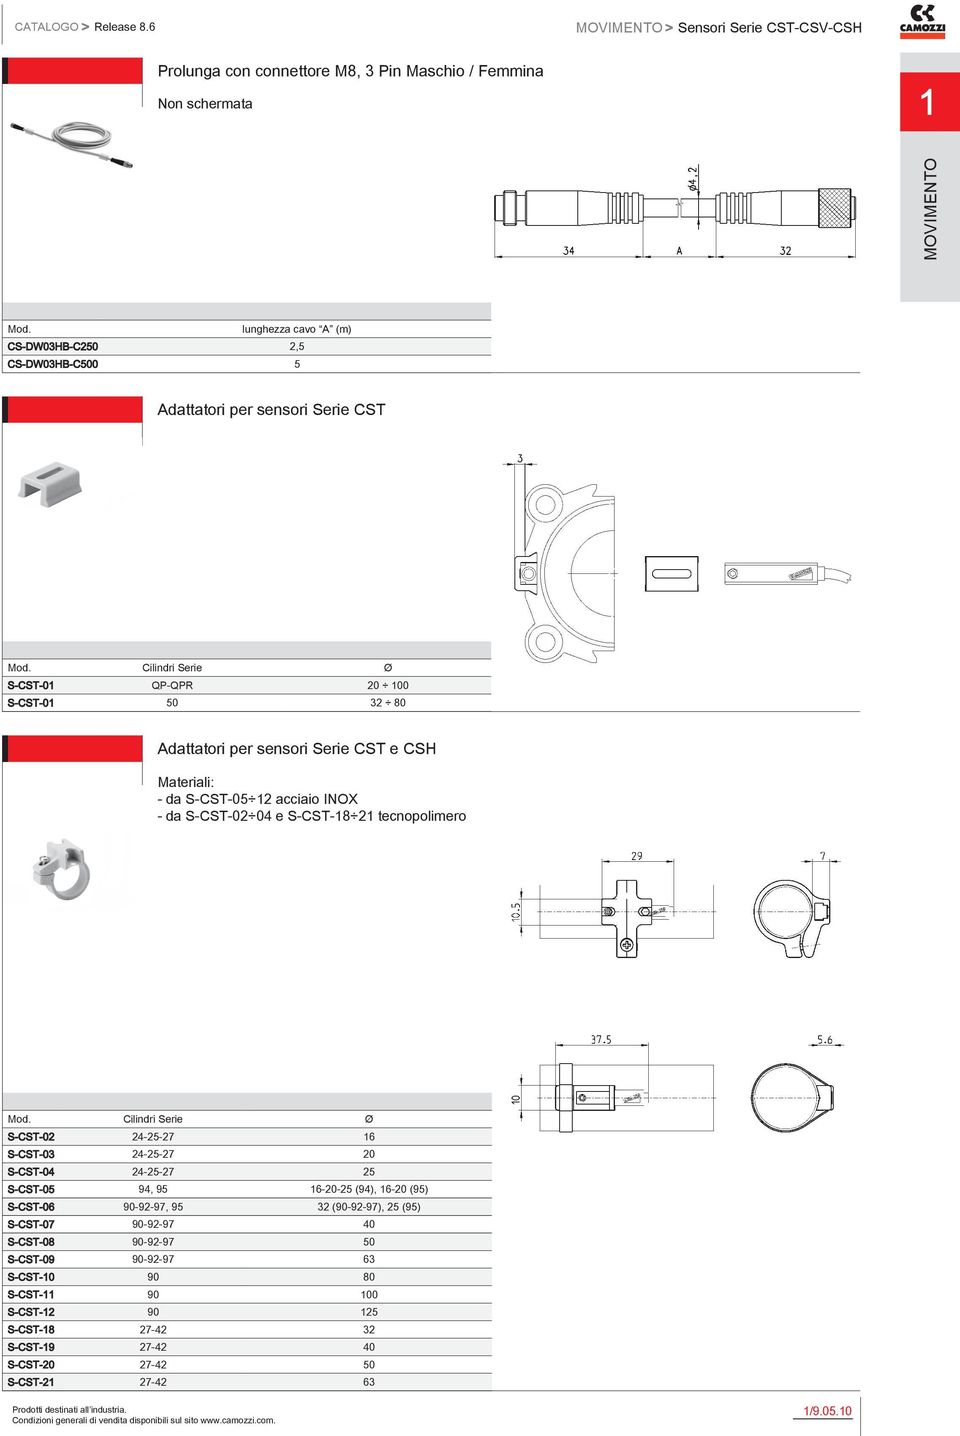 Cilindri Serie Ø S-CST-0 QP-QPR 20 00 S-CST-0 50 32 80 Adattatori per sensori Serie CST e CSH Materiali: - da S-CST-05 2 acciaio INOX - da S-CST-02 04 e S-CST-8 2 tecnopolimero